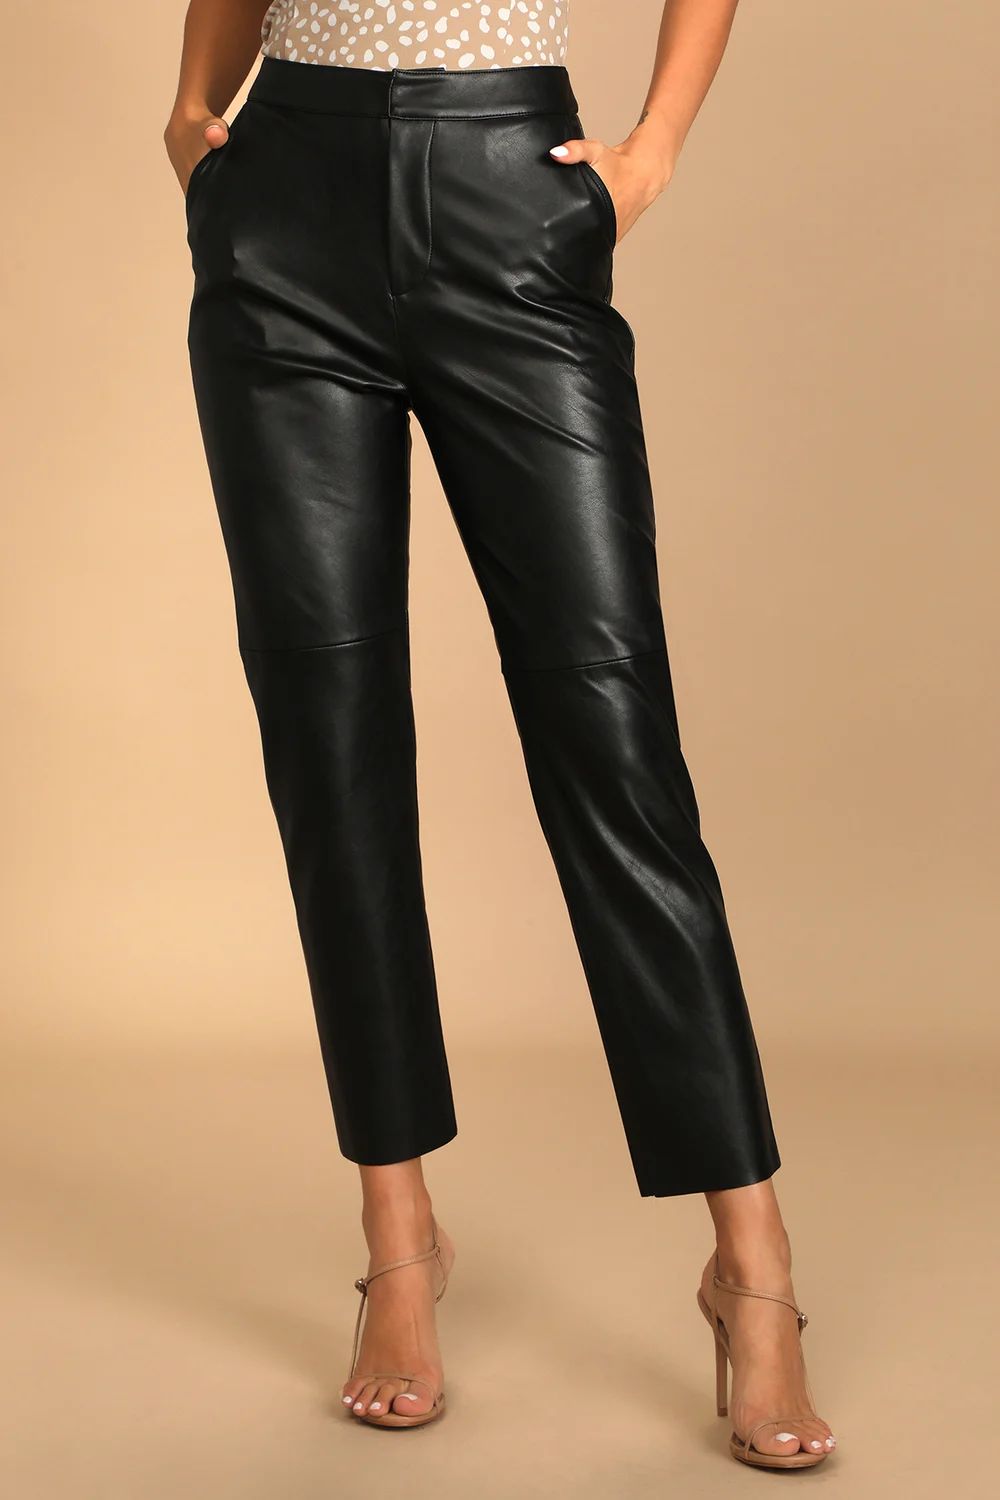 Open Minded Black Vegan Leather Pants | Lulus (US)